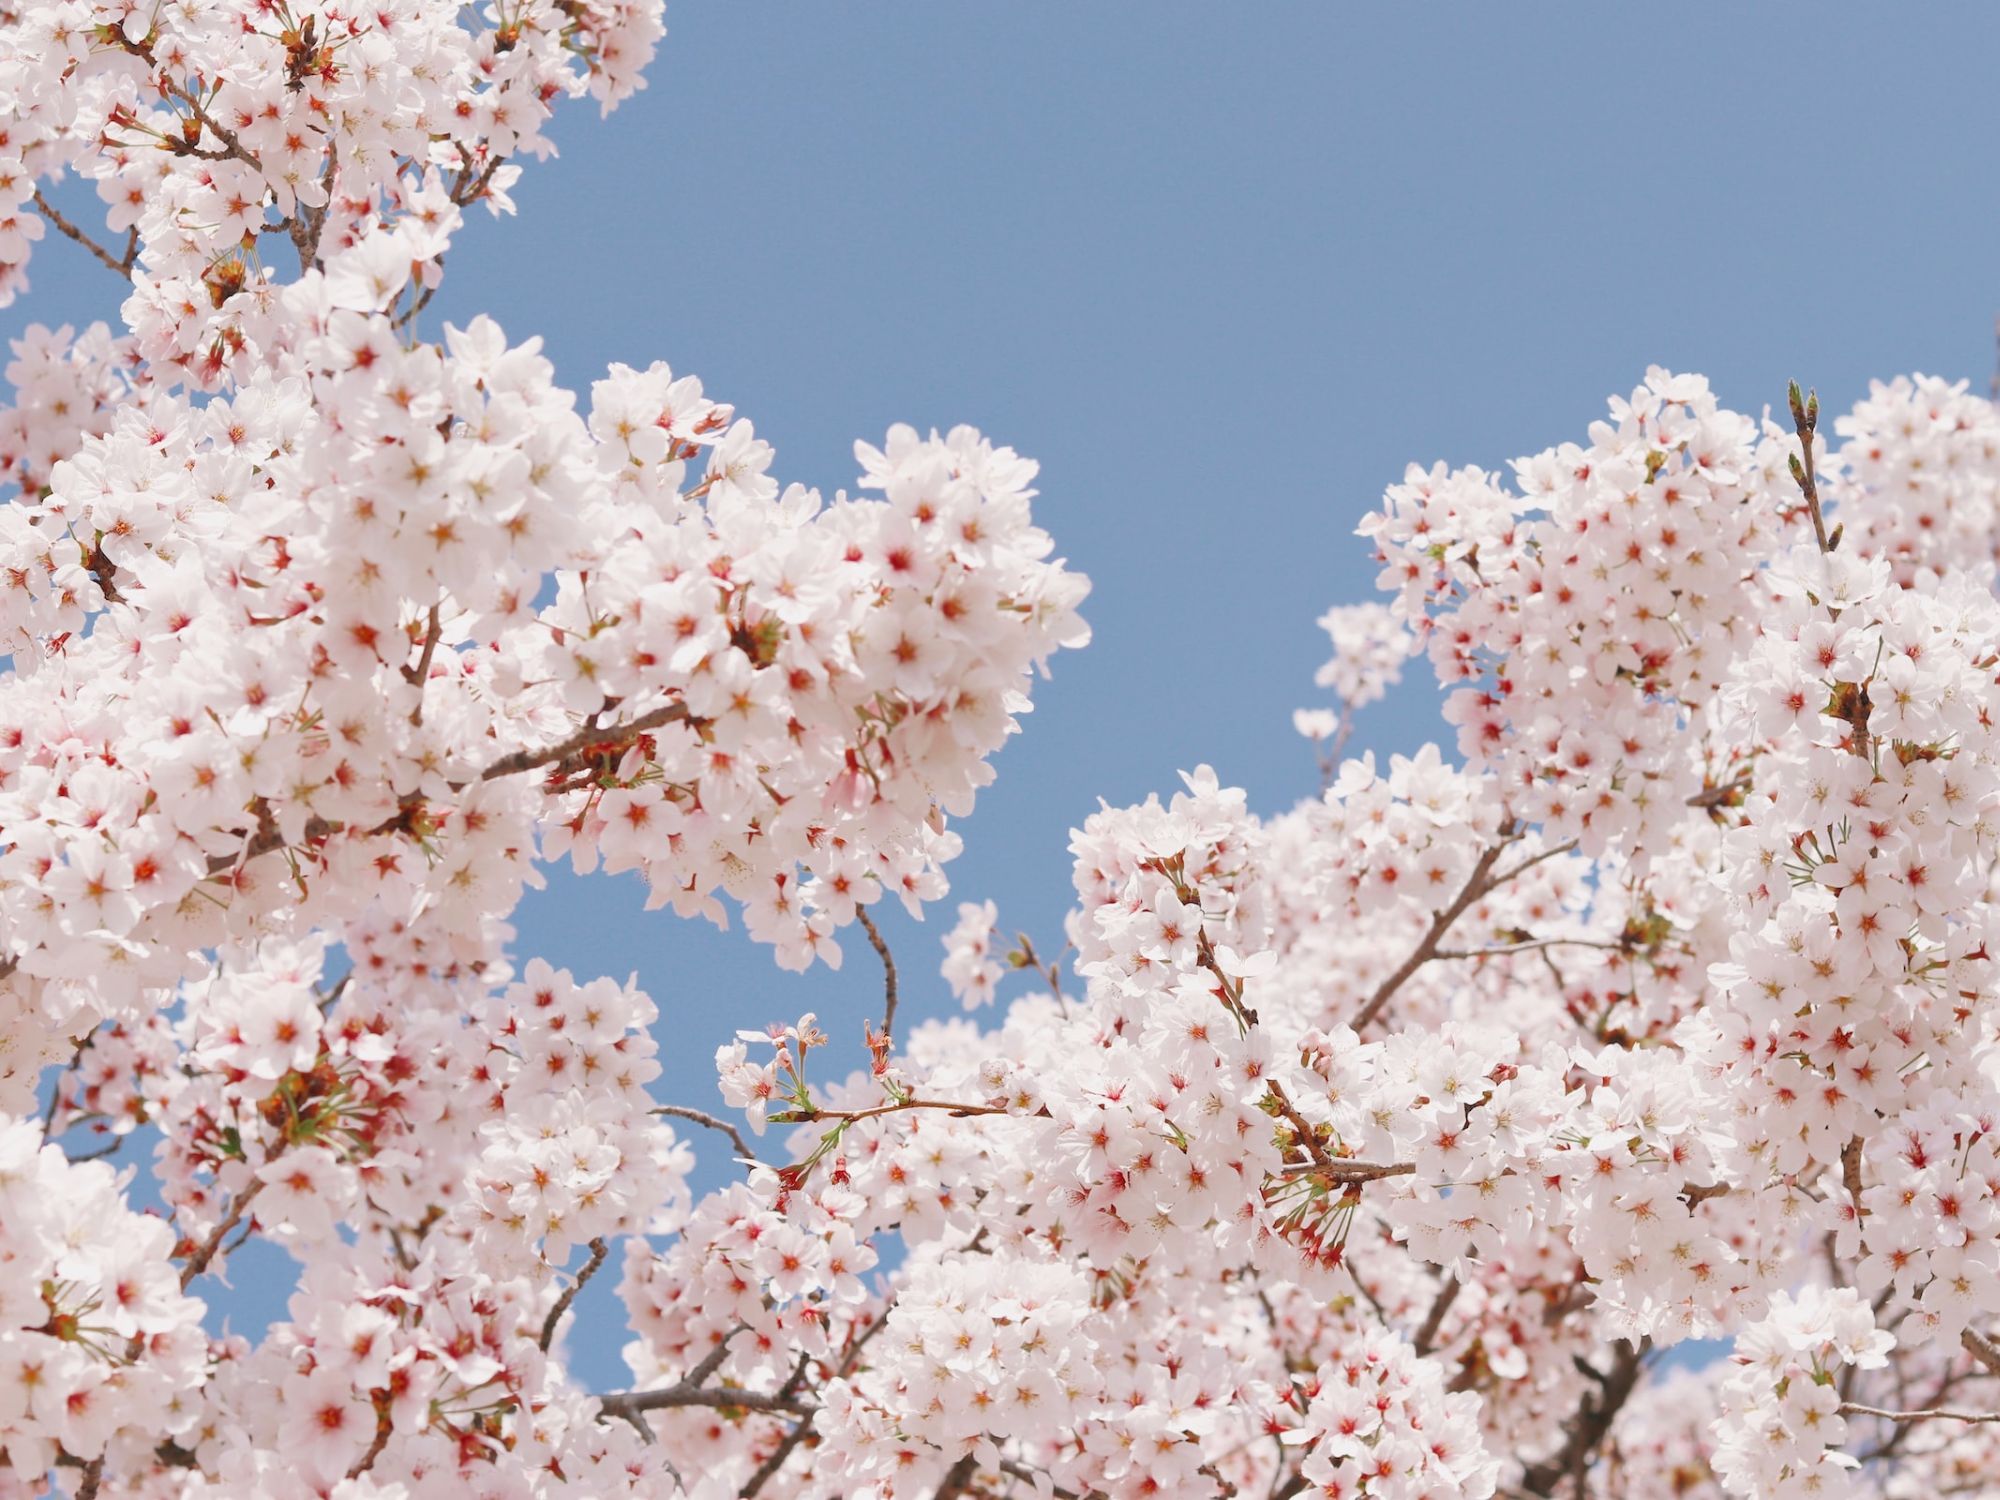 Cherry Blossom season in Kyoto, Japan